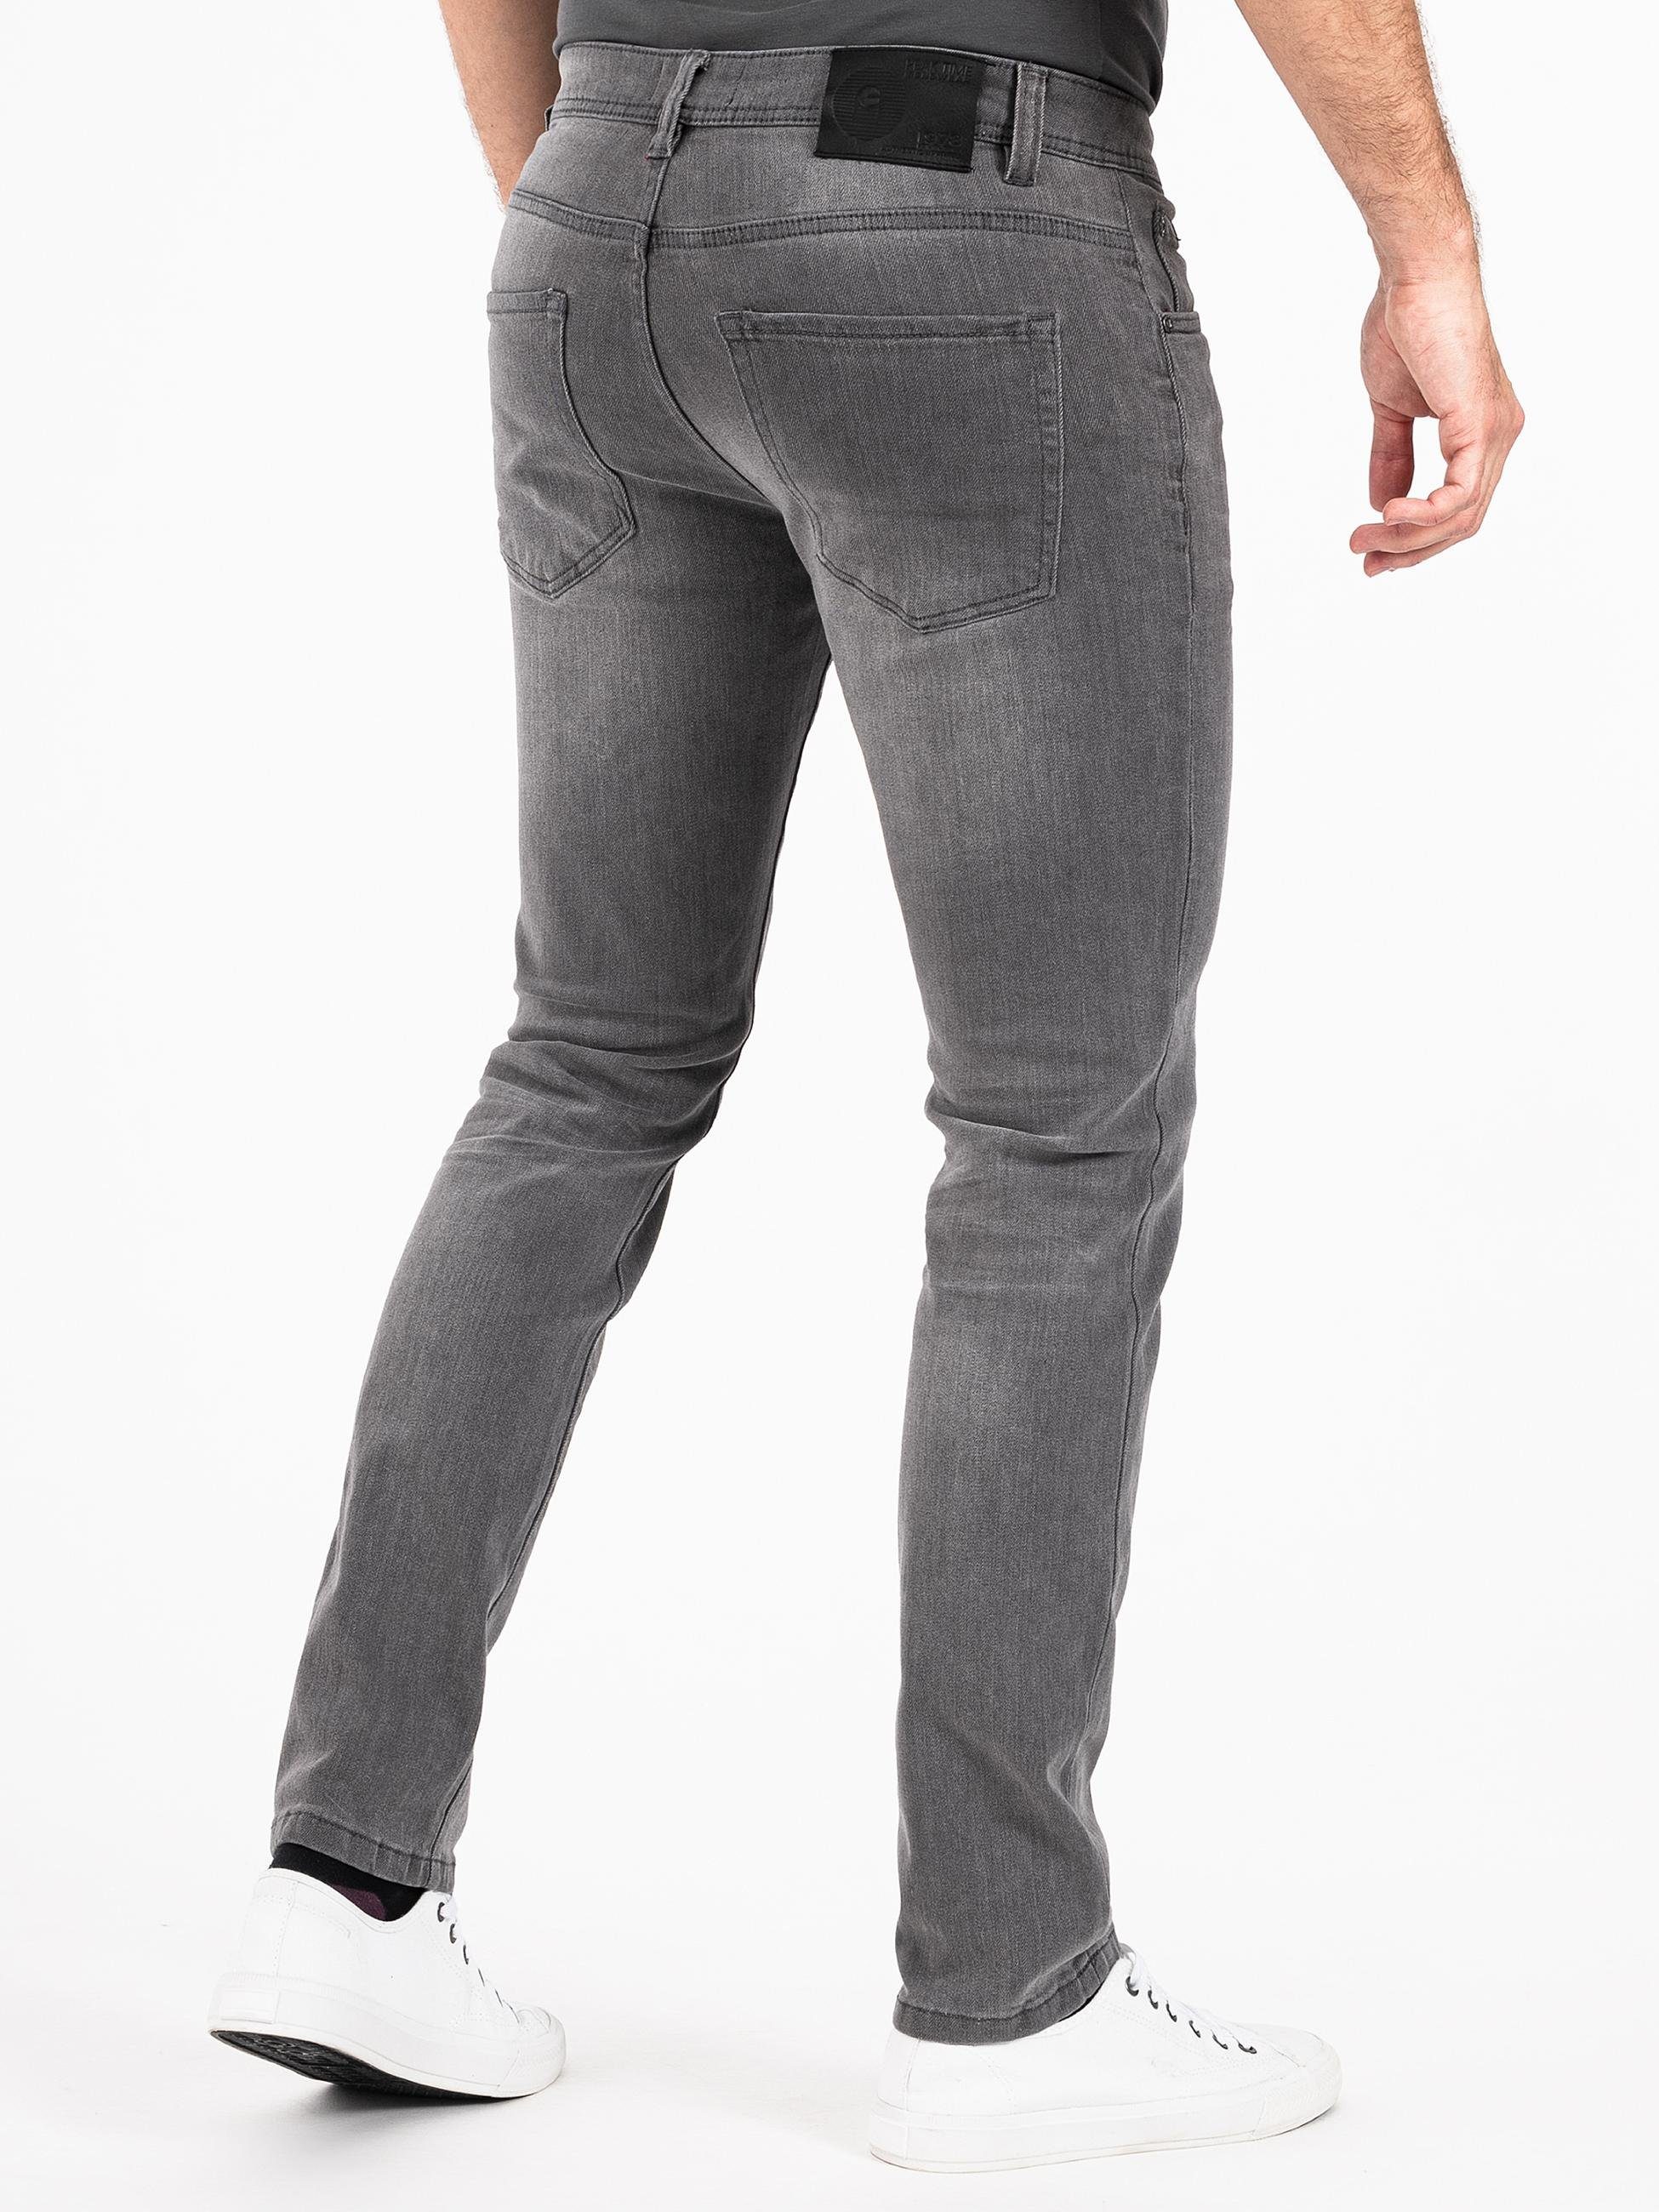 Jeans Herren Stretch-Anteil mit TIME Mailand super hellgrau PEAK Slim-fit-Jeans hohem